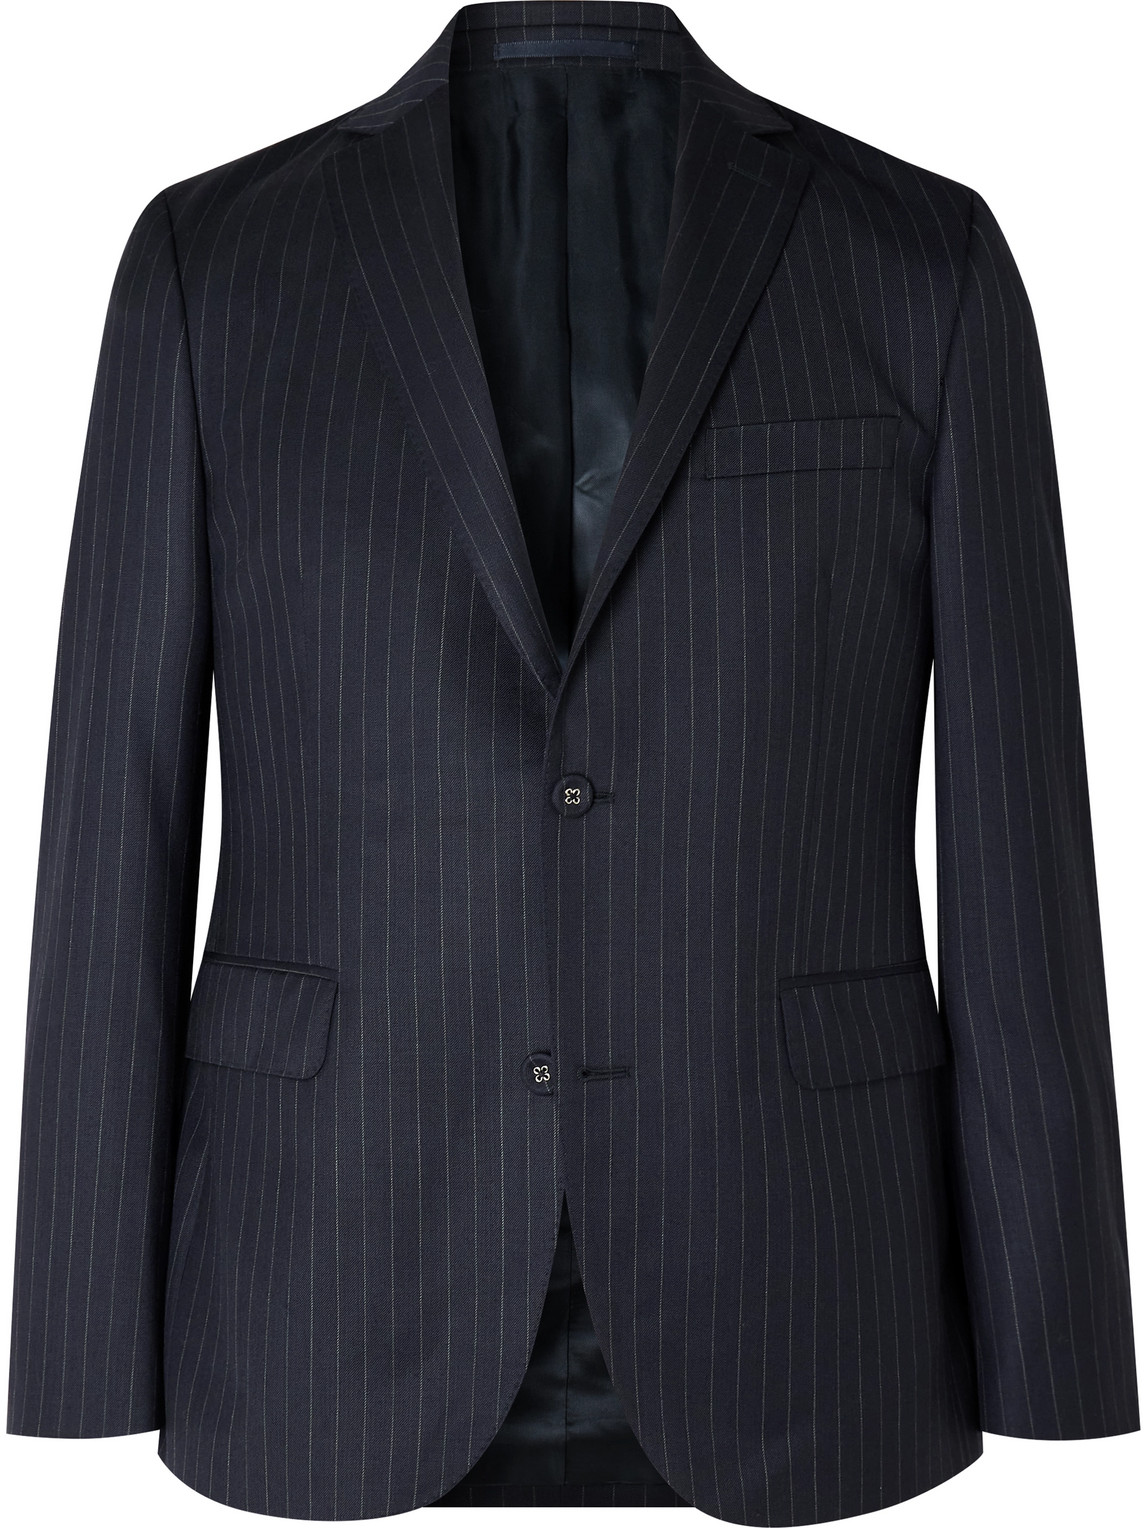 Officine Générale 375 Pinstriped Wool-Twill Suit Jacket